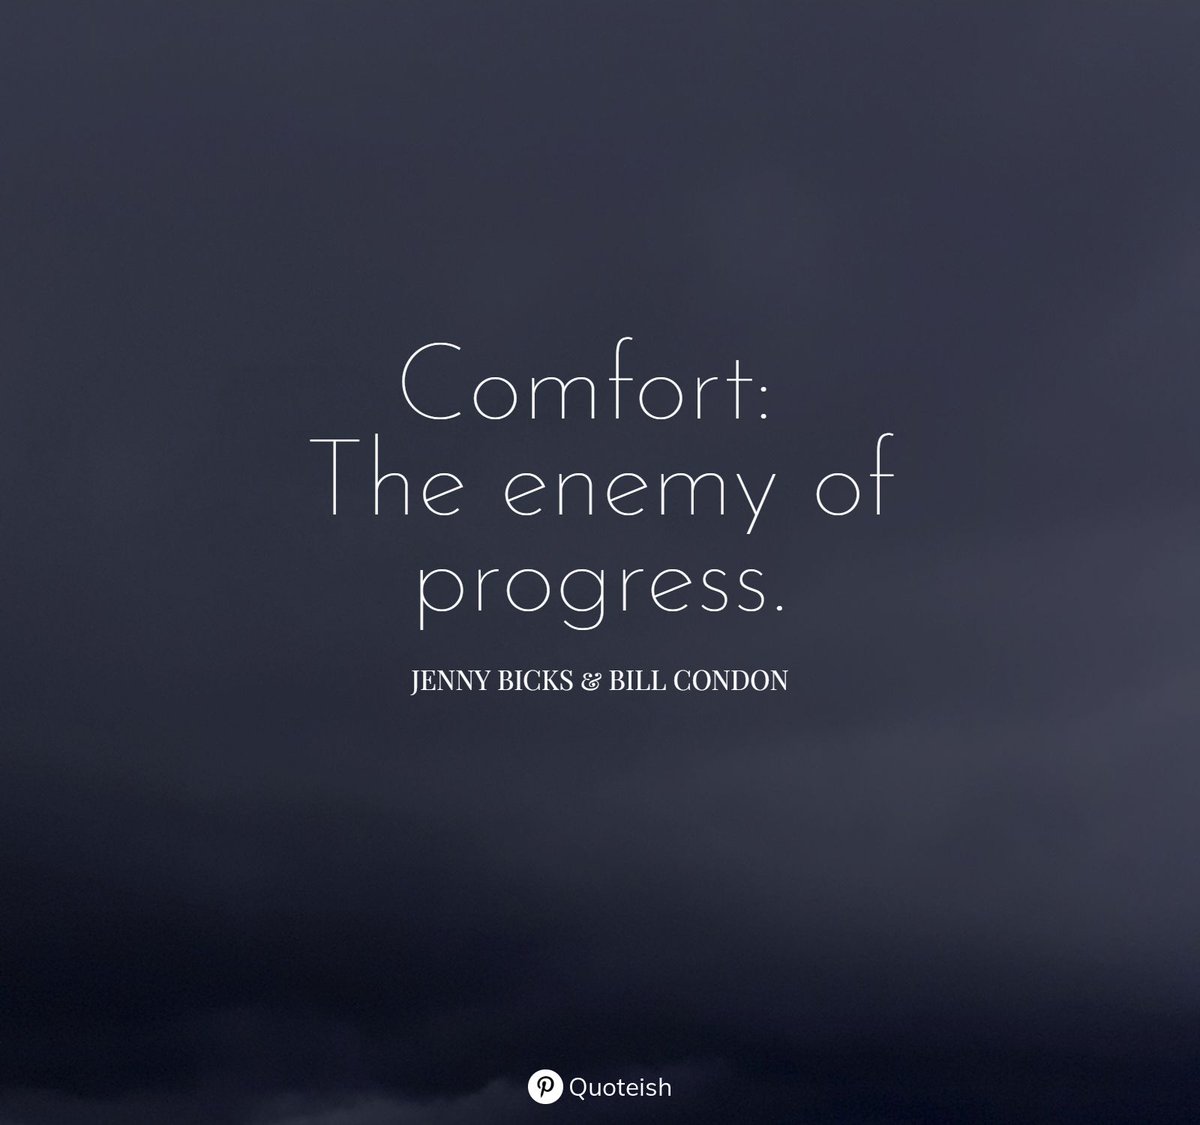 Comfort: The enemy of progress. - Jenny Bicks & Bill Condon

More Quotes: https://t.co/IPk1wyMGV8 https://t.co/V35vIouarV